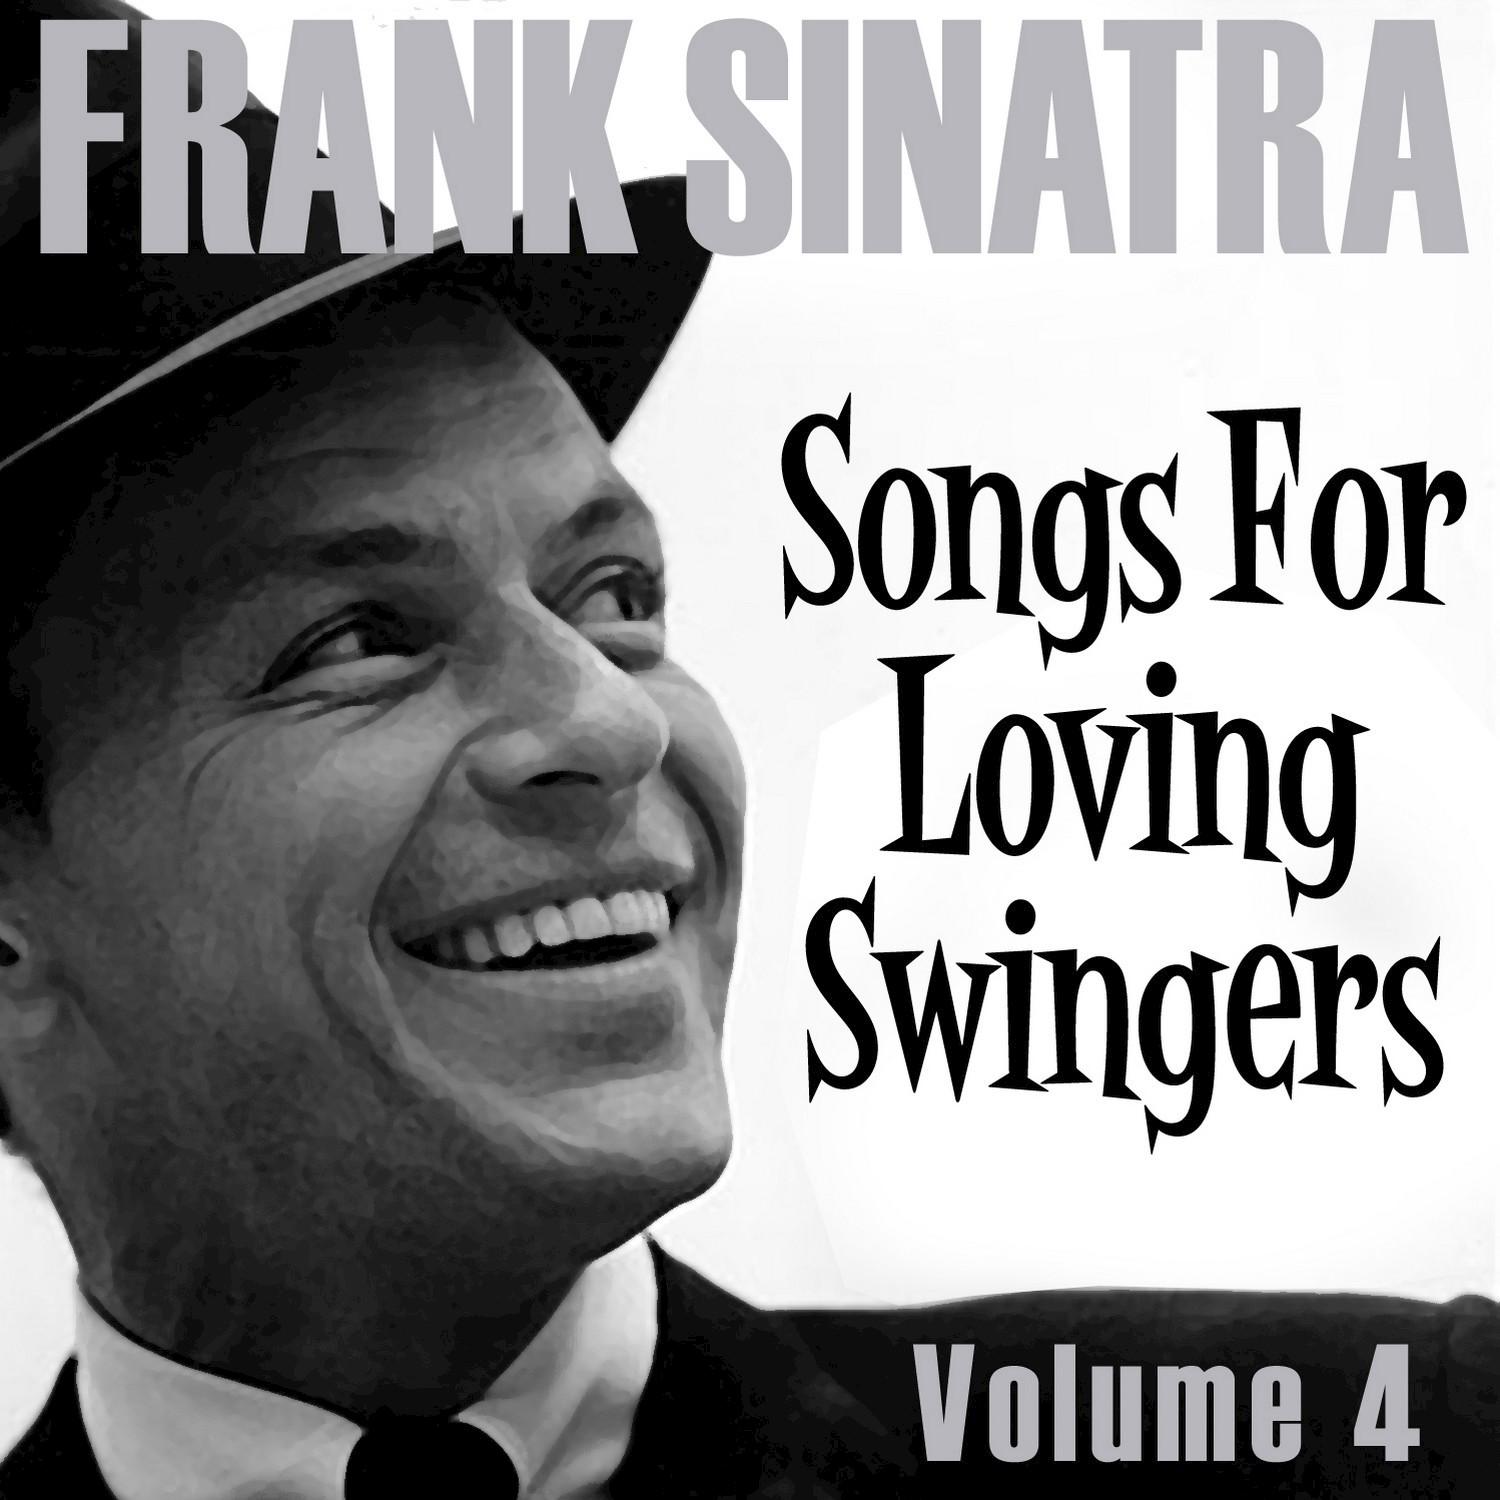 Frank Sinatra - Songs for Loving Swingers, Vol. 4